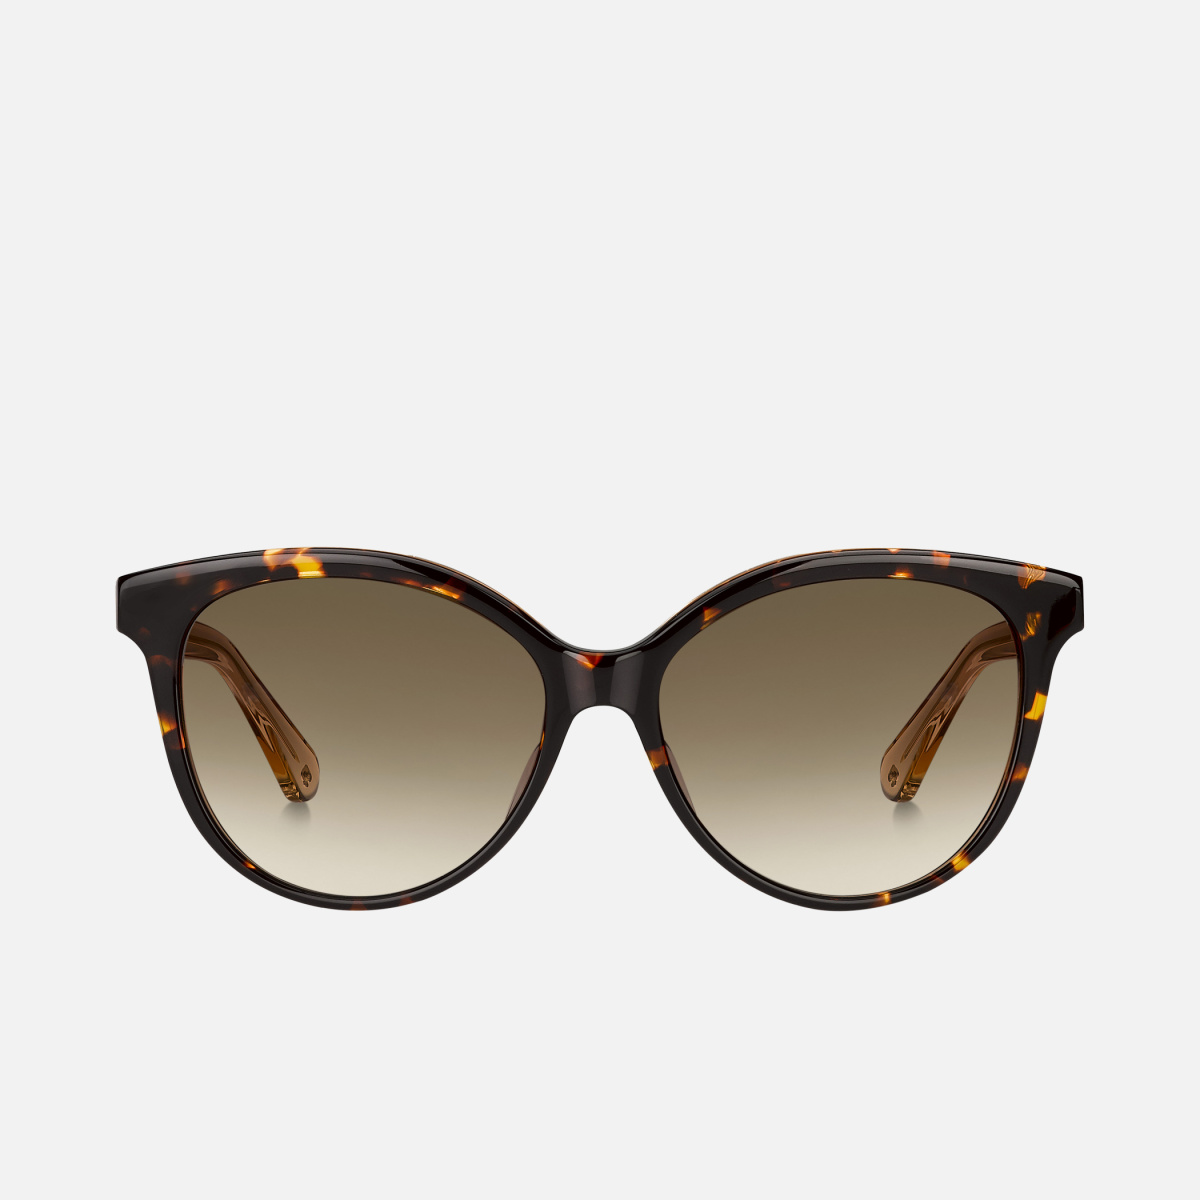 KATE SPADE NEW YORK Women UV-Protected Sunglasses - KINSLEY-F-S-086 |  Lifestyle Stores | MG Road | Gurugram